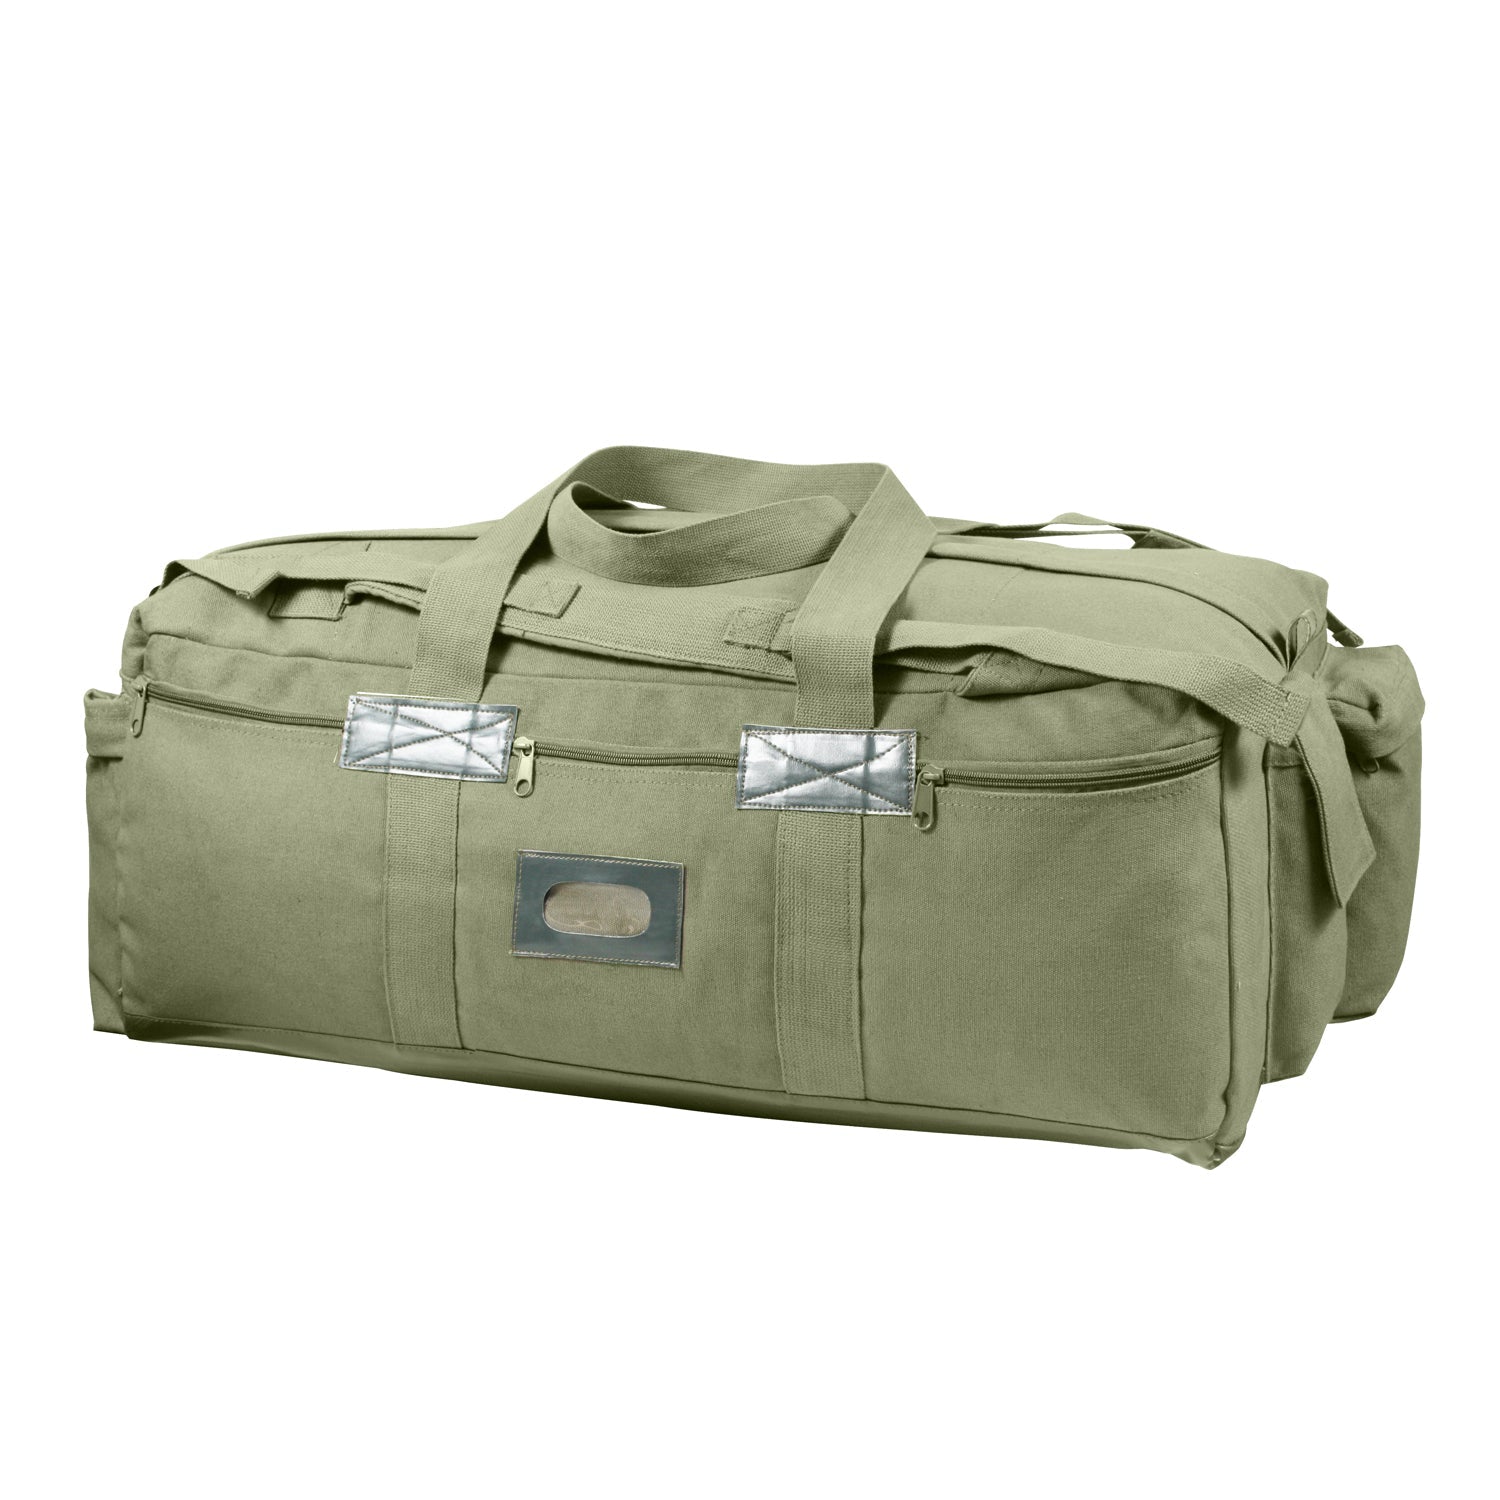 Rothco Canvas Mossad Tactical Duffle Bag Olive Drab (8136)